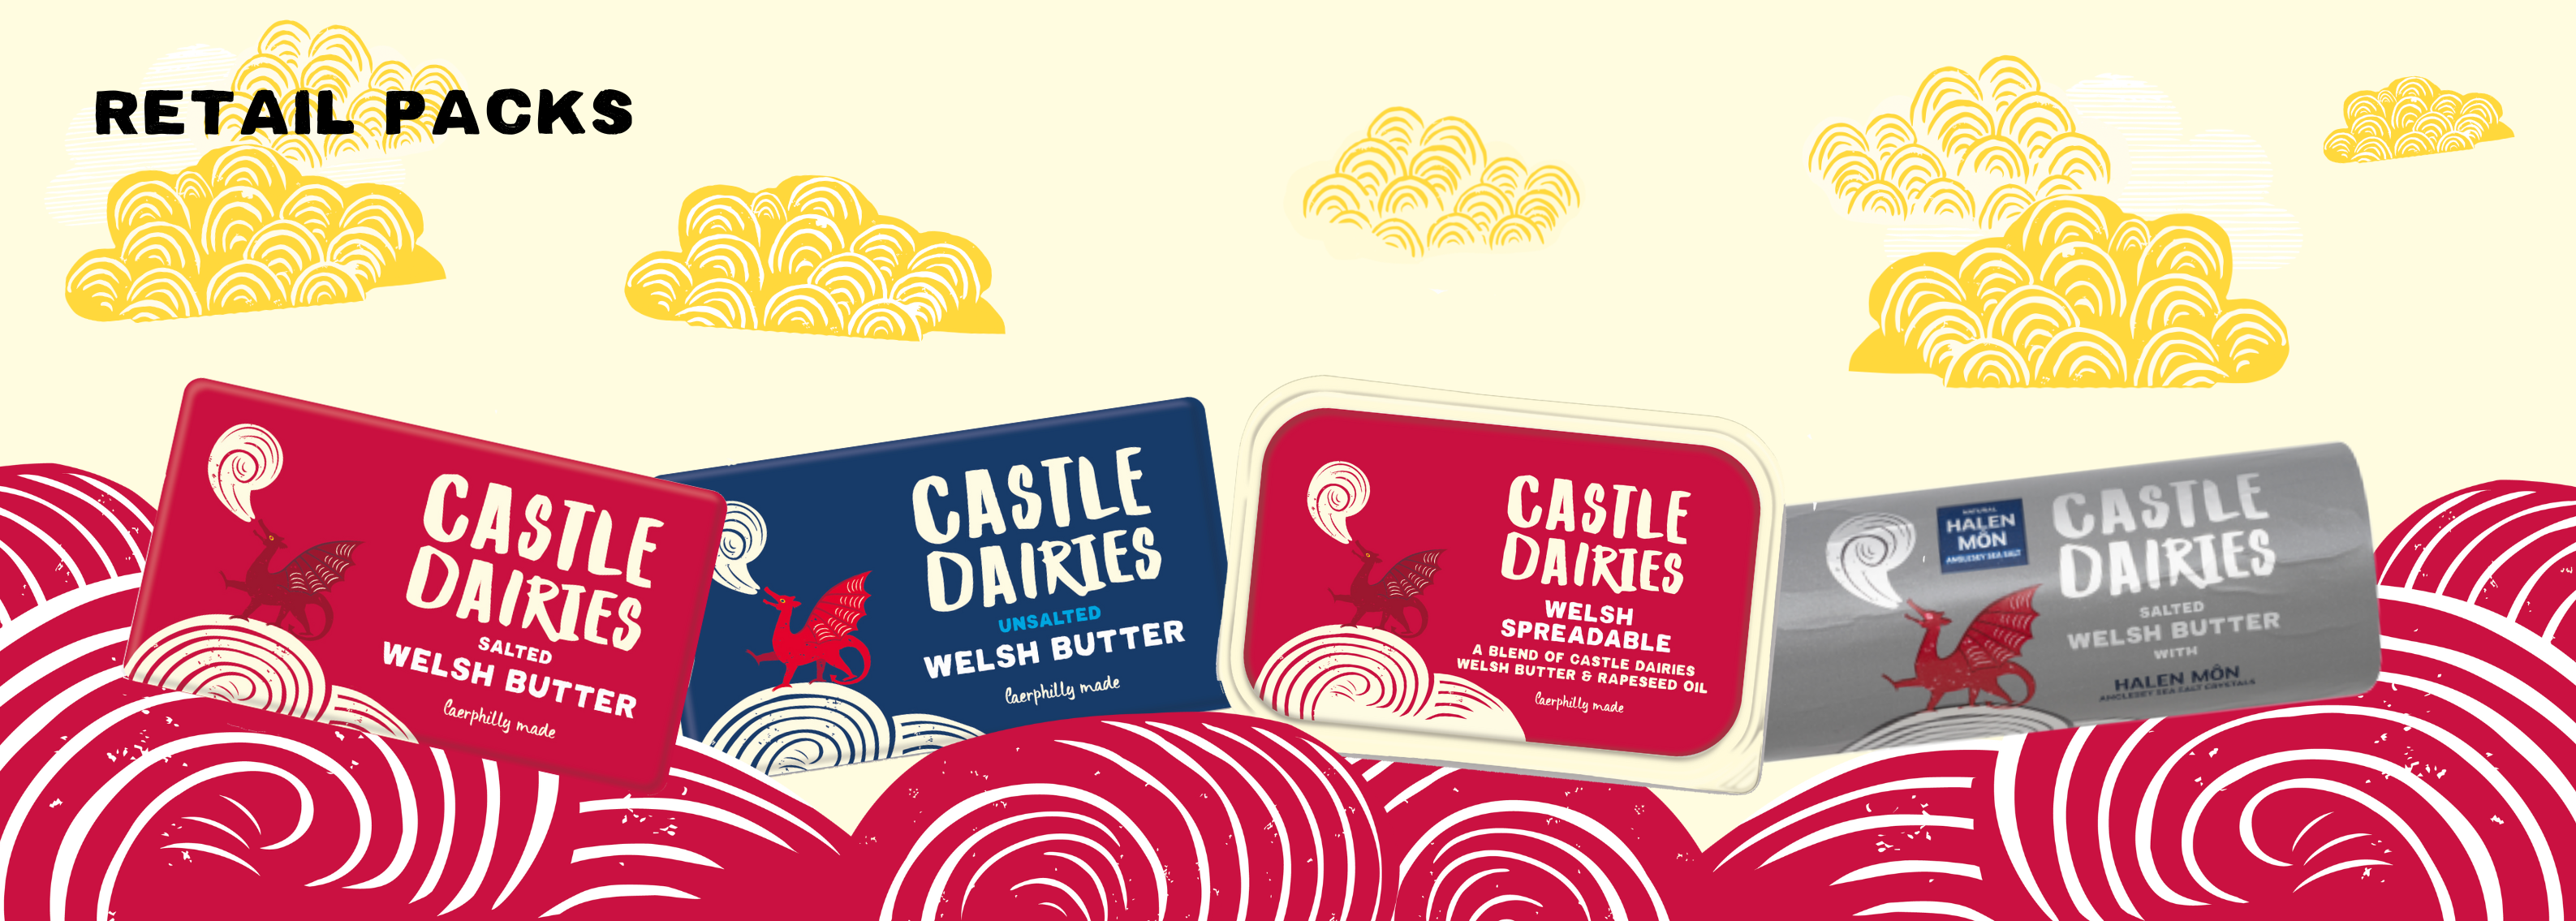 Castle Dairies Welsh Butter Product Range